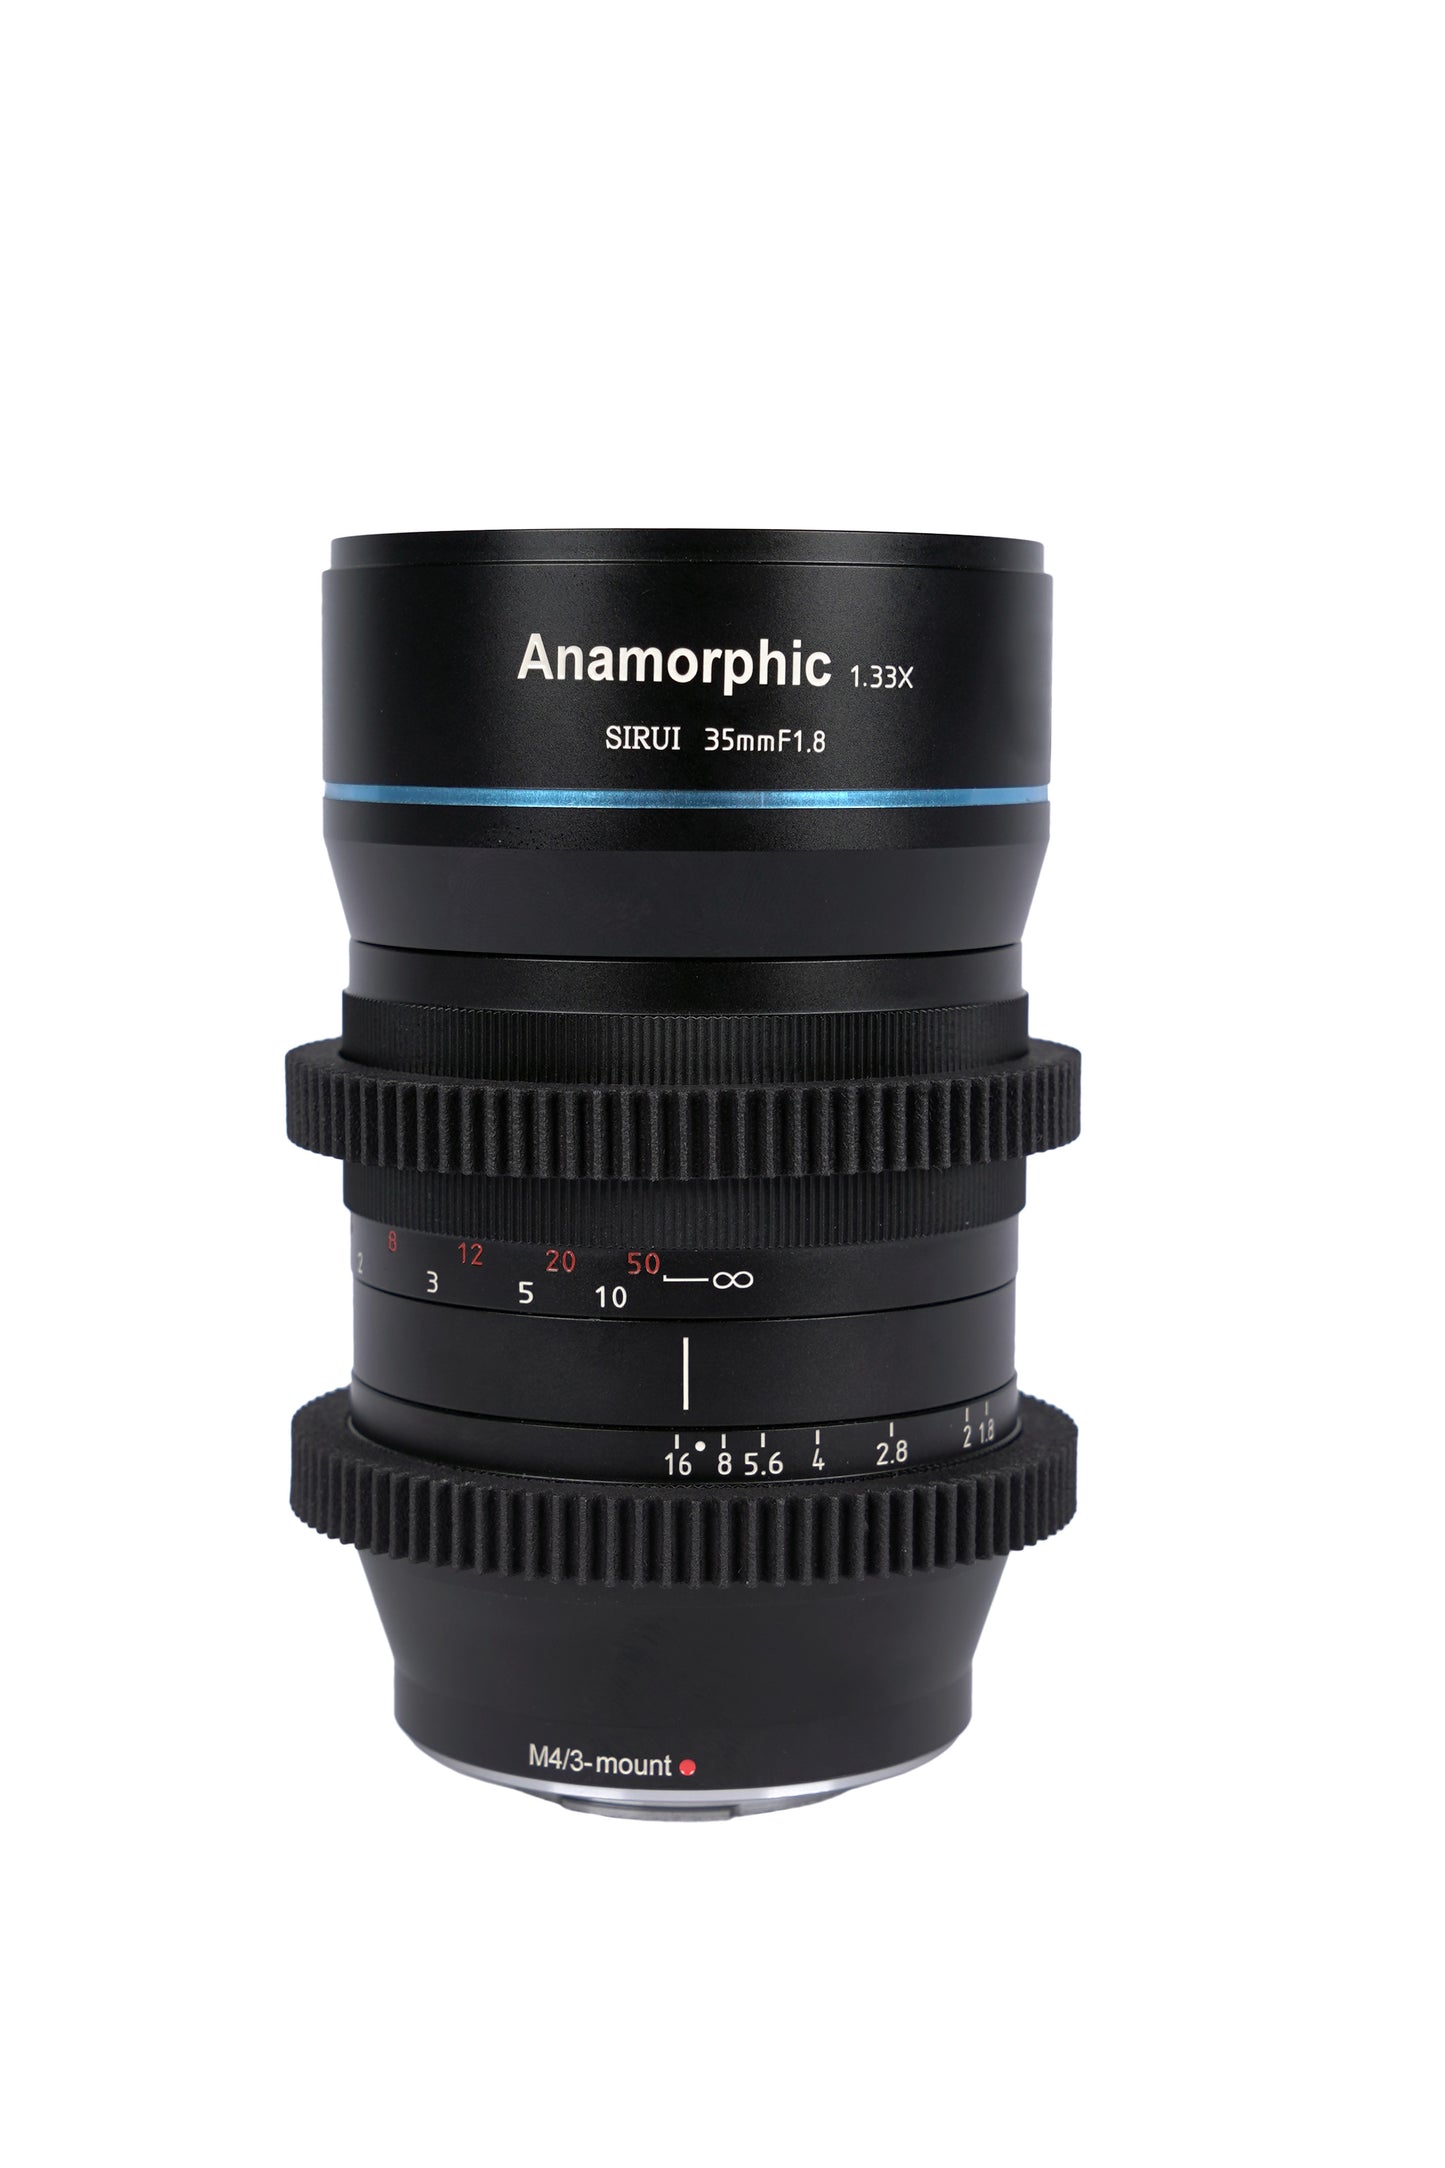 SIRUI SR35-M 35mm f1.8 Anamorphic Lens 1.33x - for various camera mounts